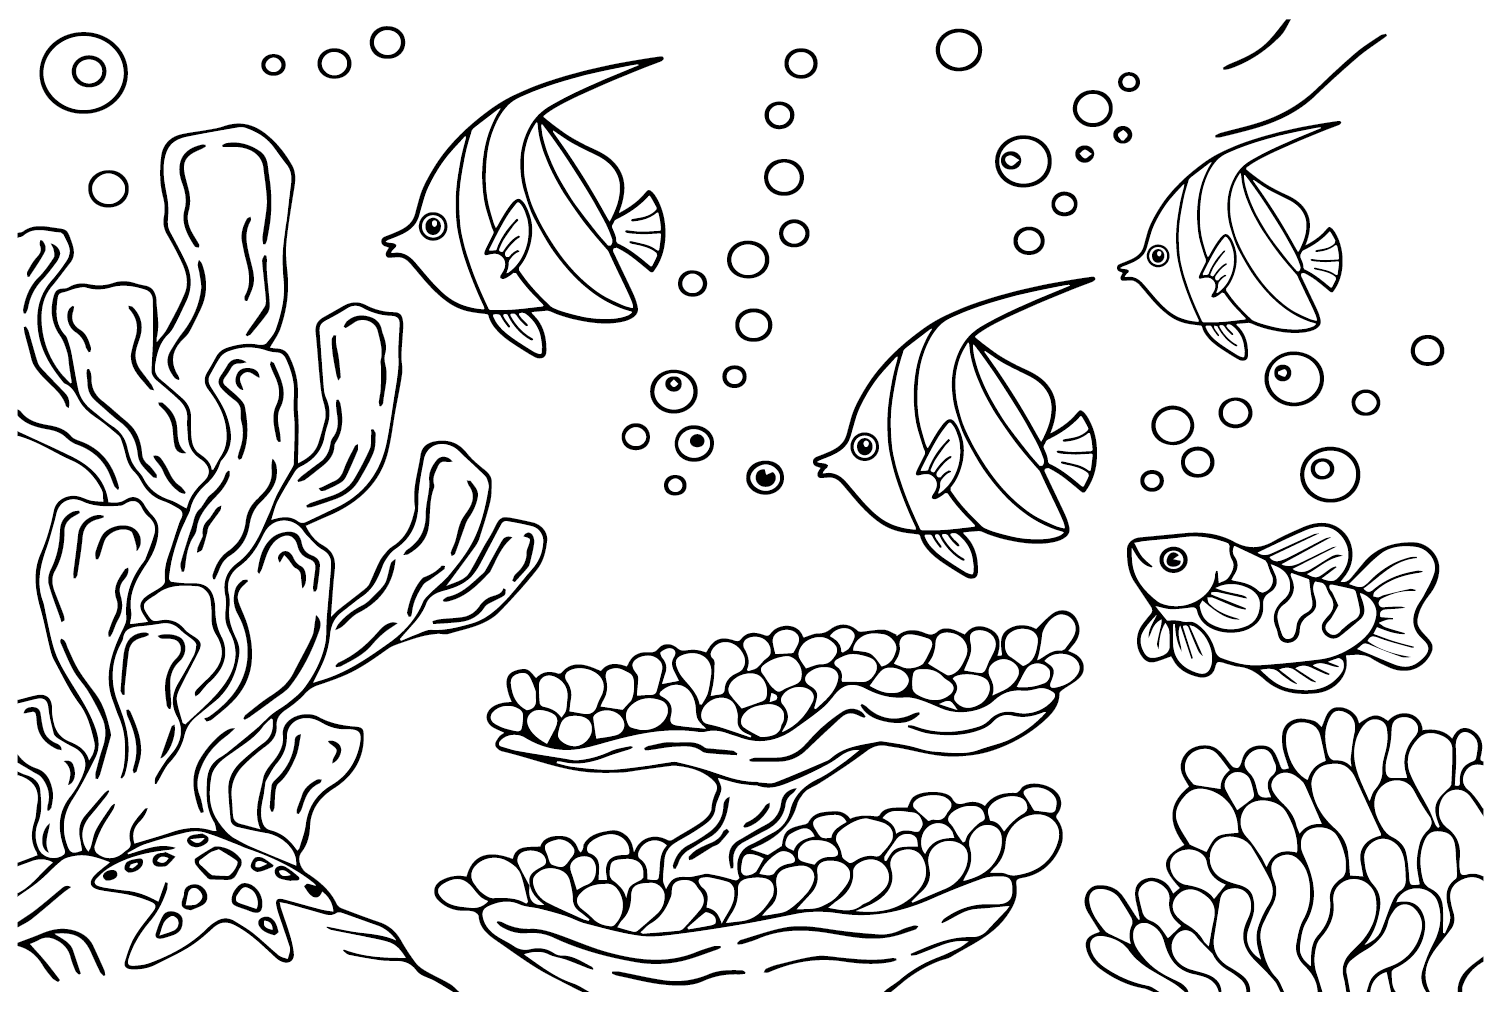 Pennant Coralfish Printable Coloring Page - Free Printable Coloring Pages